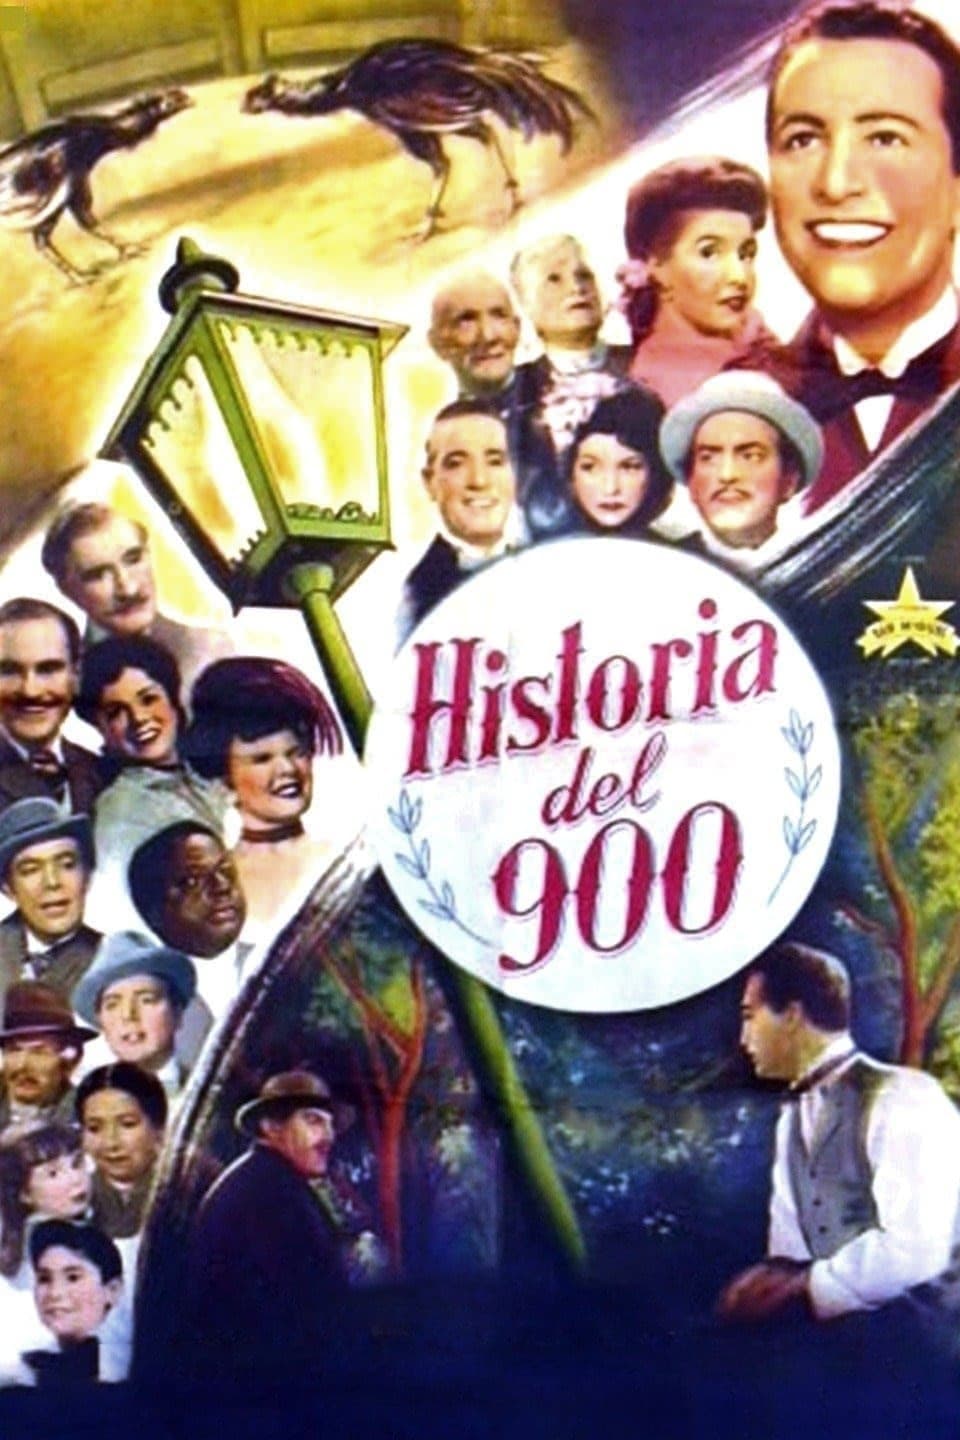 Historia del 900 (1949)